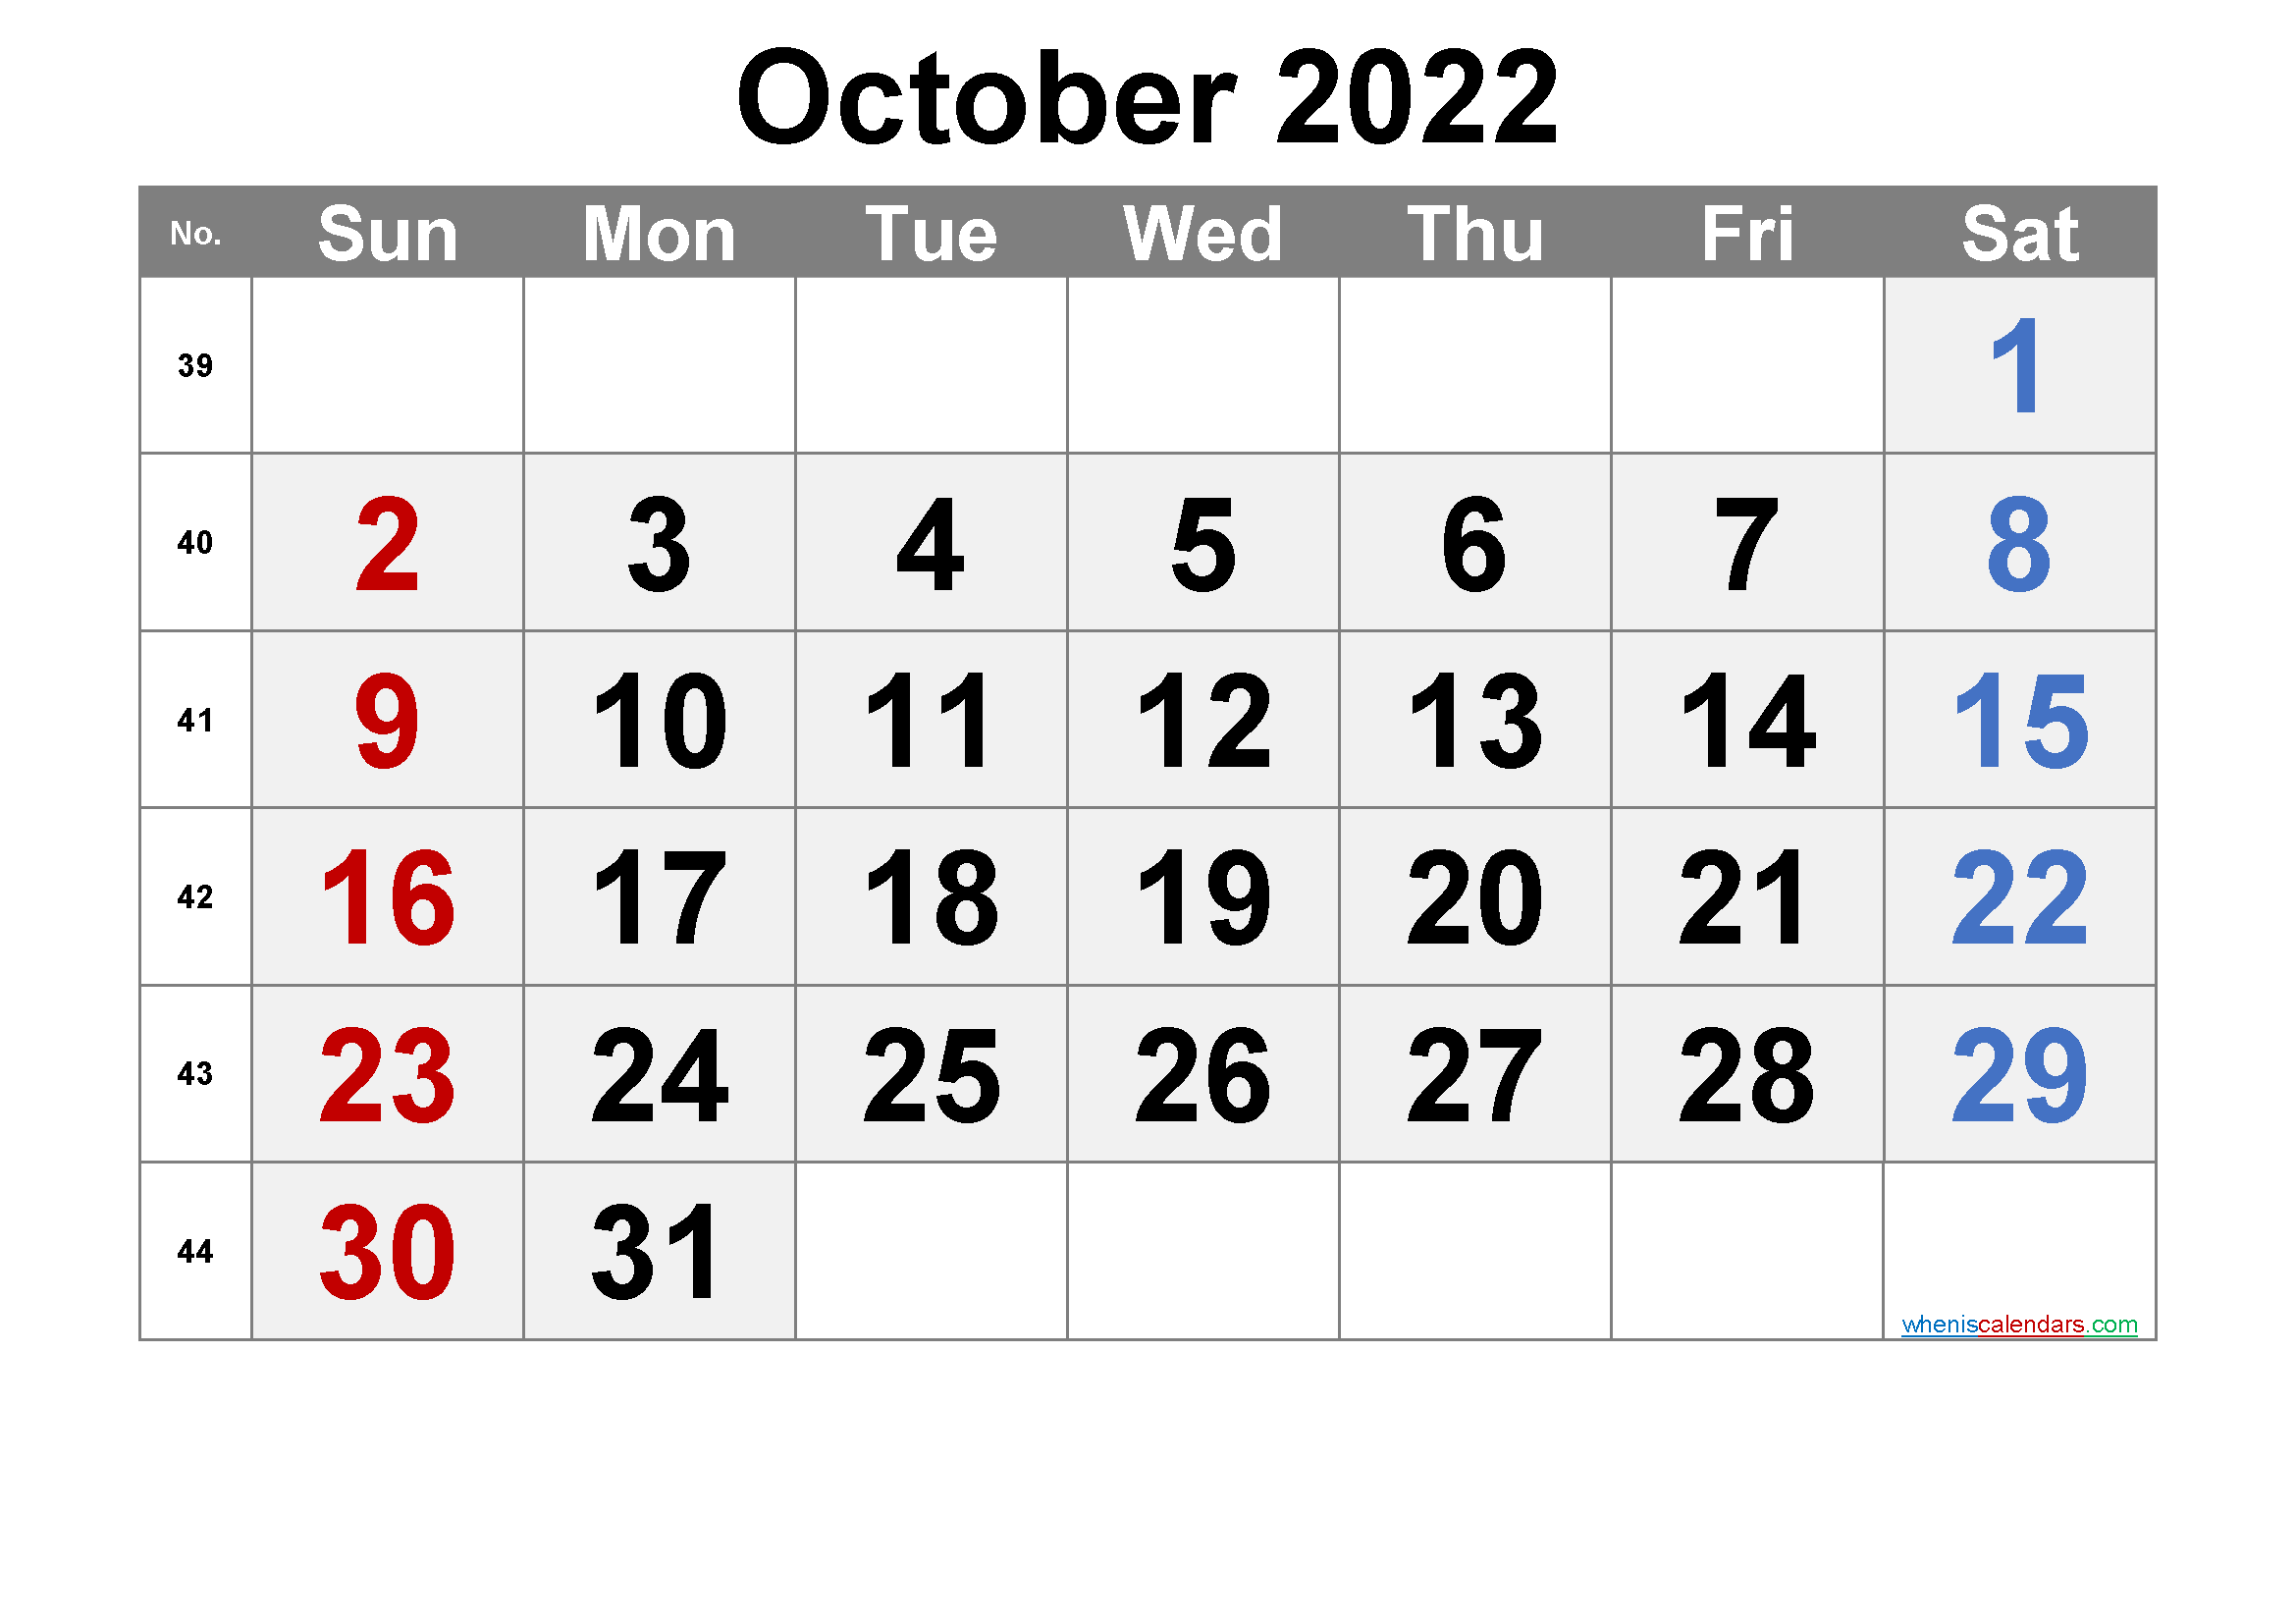 October 2022 Calendar Template Free Printable Calendar October 2022 With Week Numbers